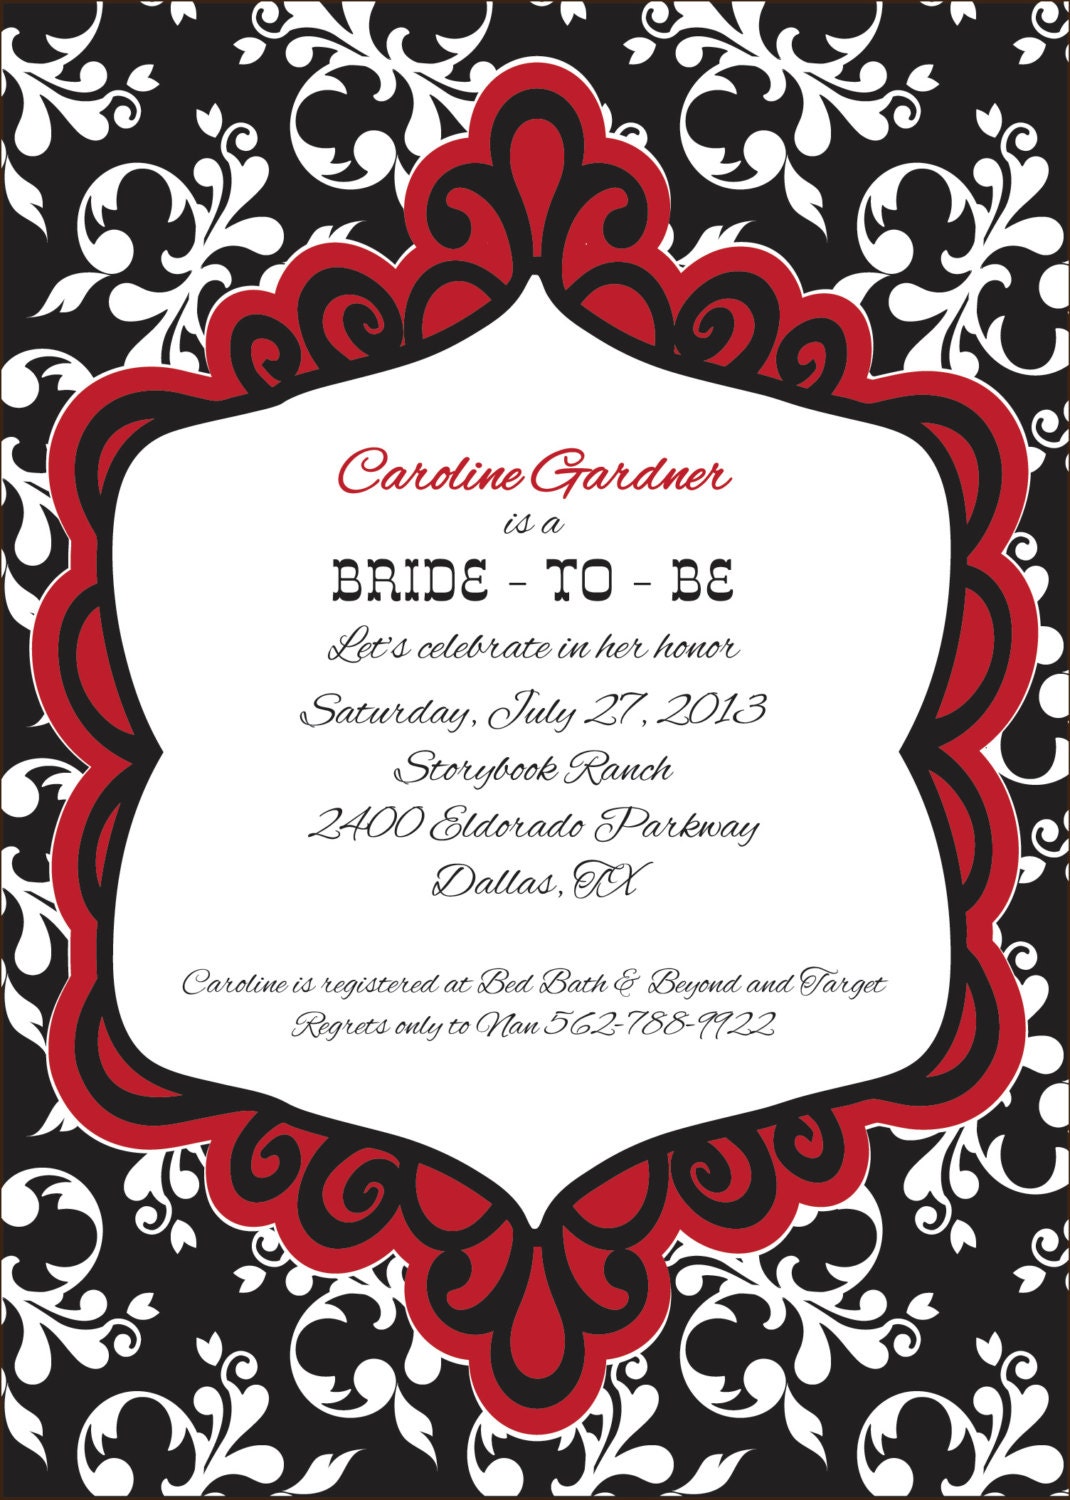 Bridal Shower Invitation - Red & Black Brocade - Bachelorette Party ...